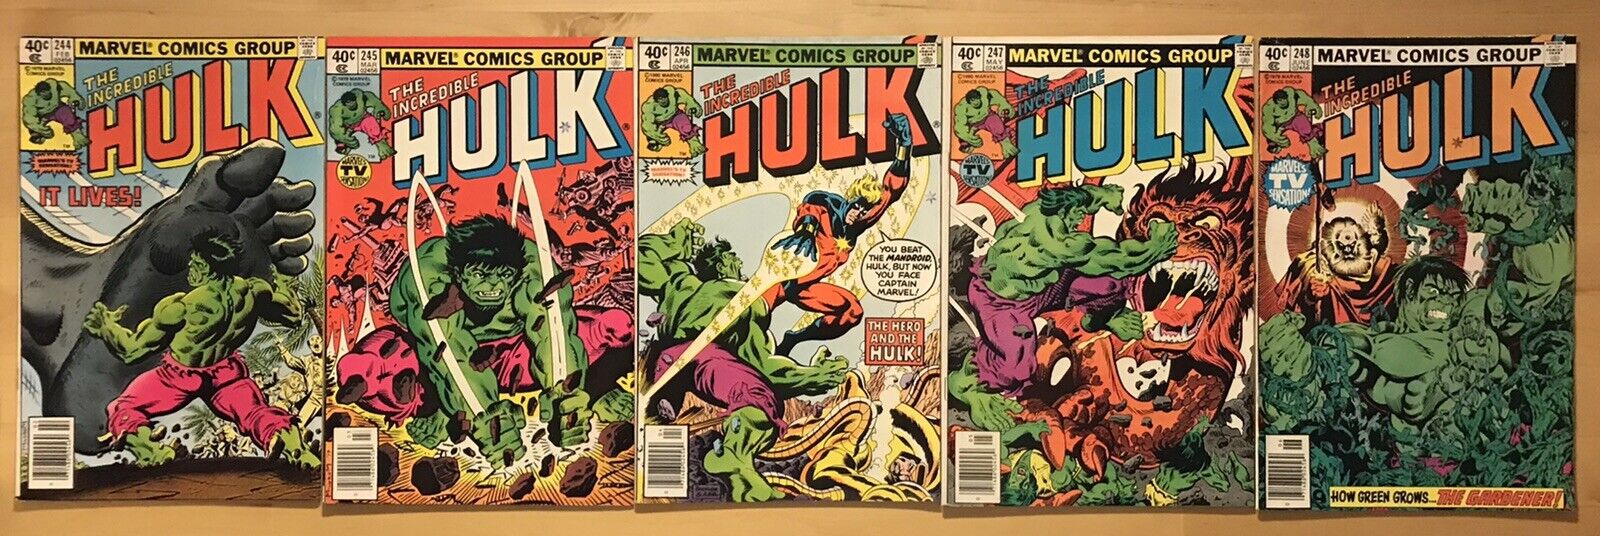 The Incredible Hulk #244, #245, #246, #247, #248 (ALL MARK JEWELERS) Marvel Lot